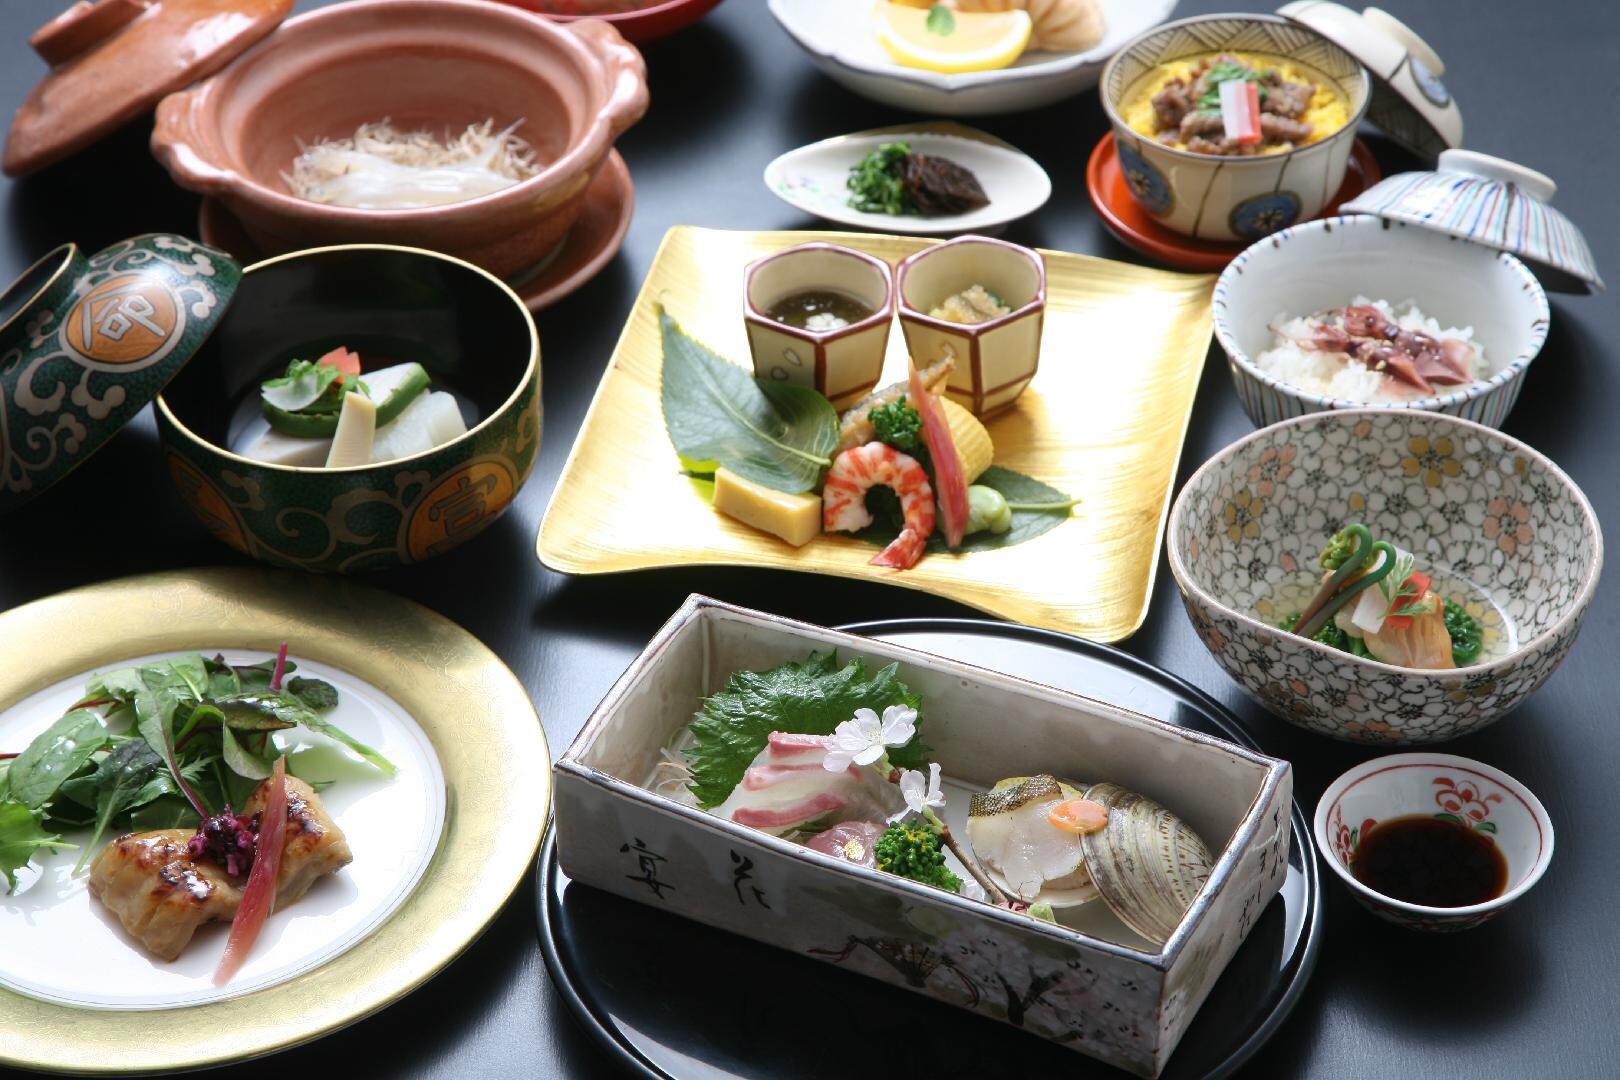 KIZASHI "Special Selection" Gion Kyoto Kaiseki Dinner